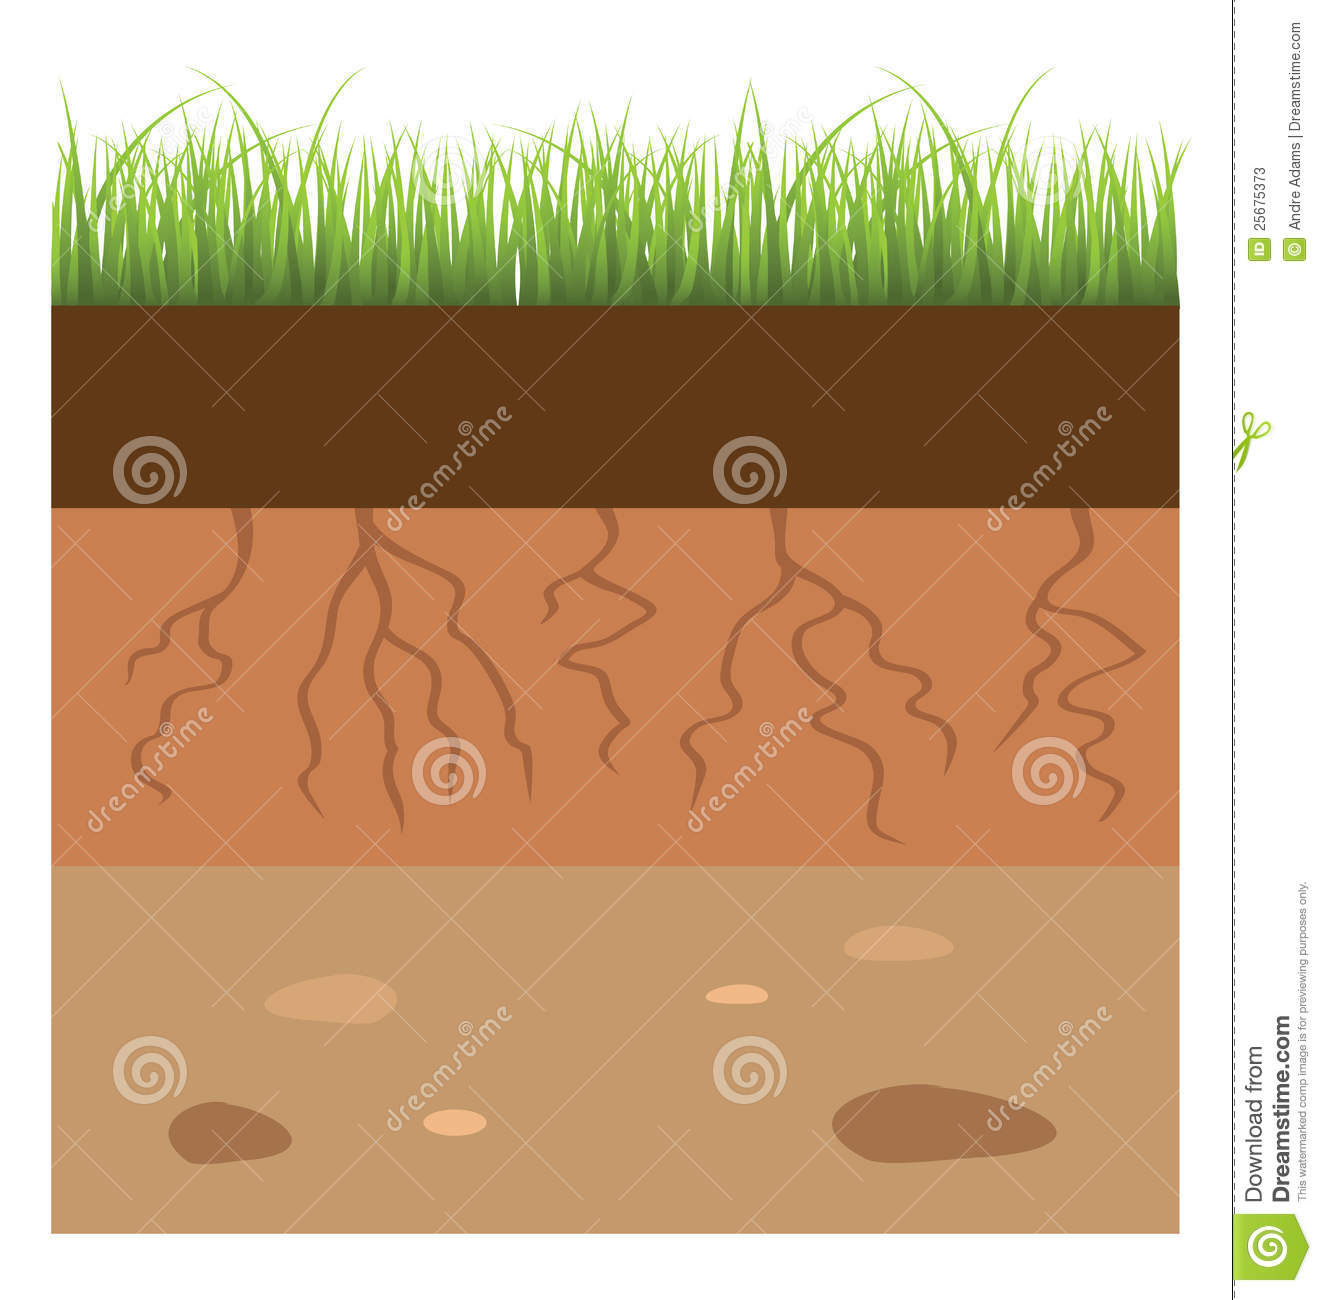 Soil Layer Stock Photos   Image  25675373